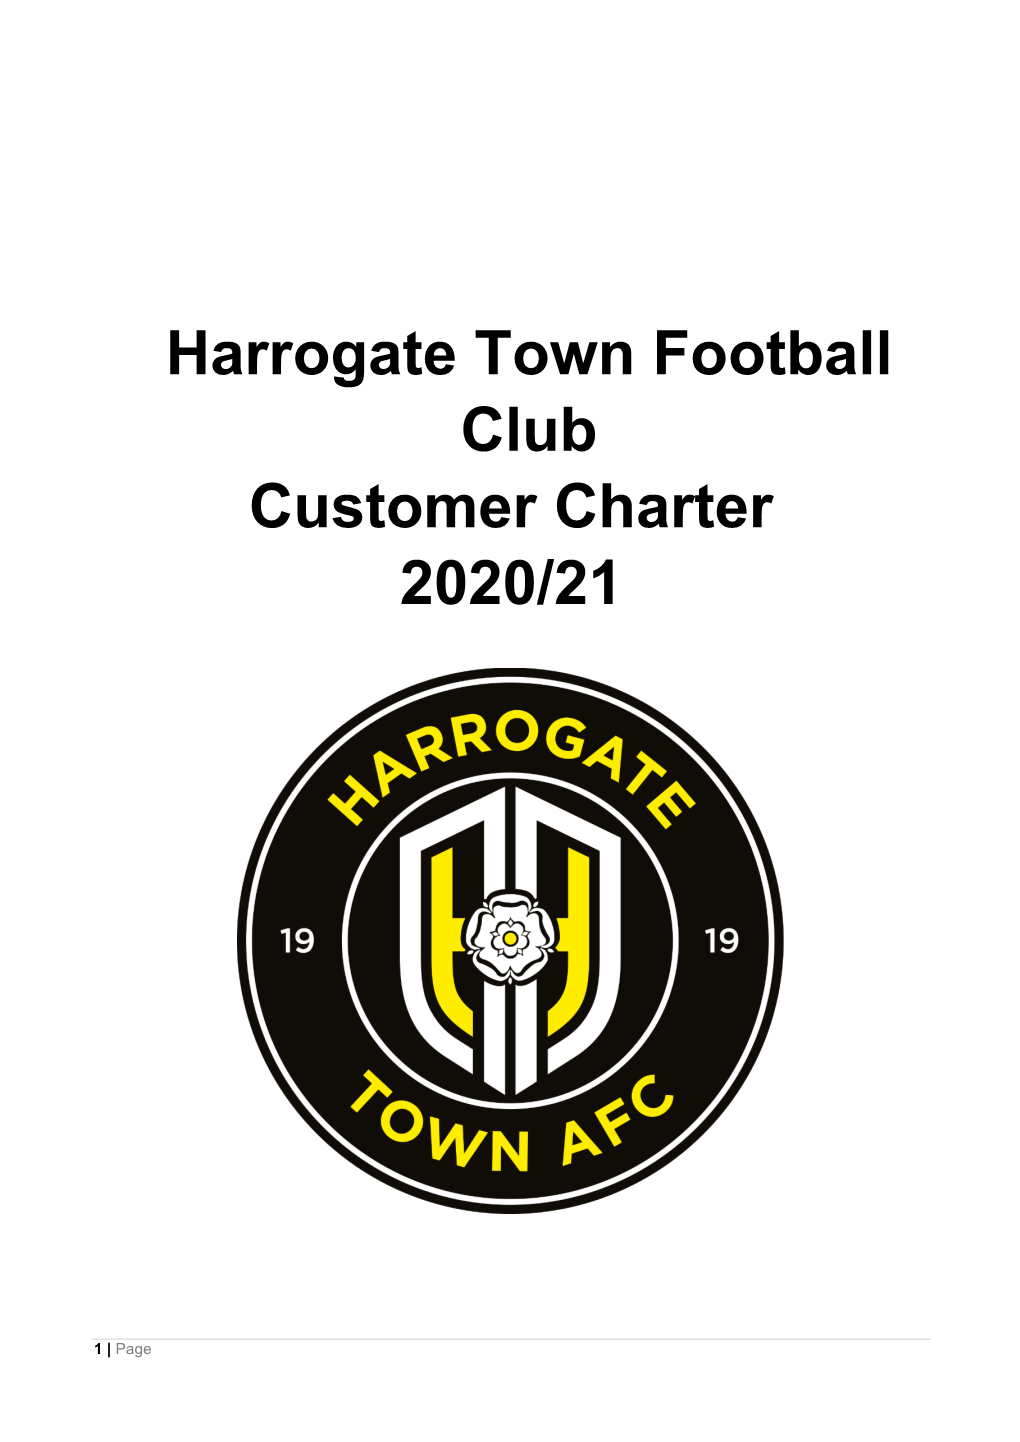 Harrogate Town Football Club Customer Charter 2020/21